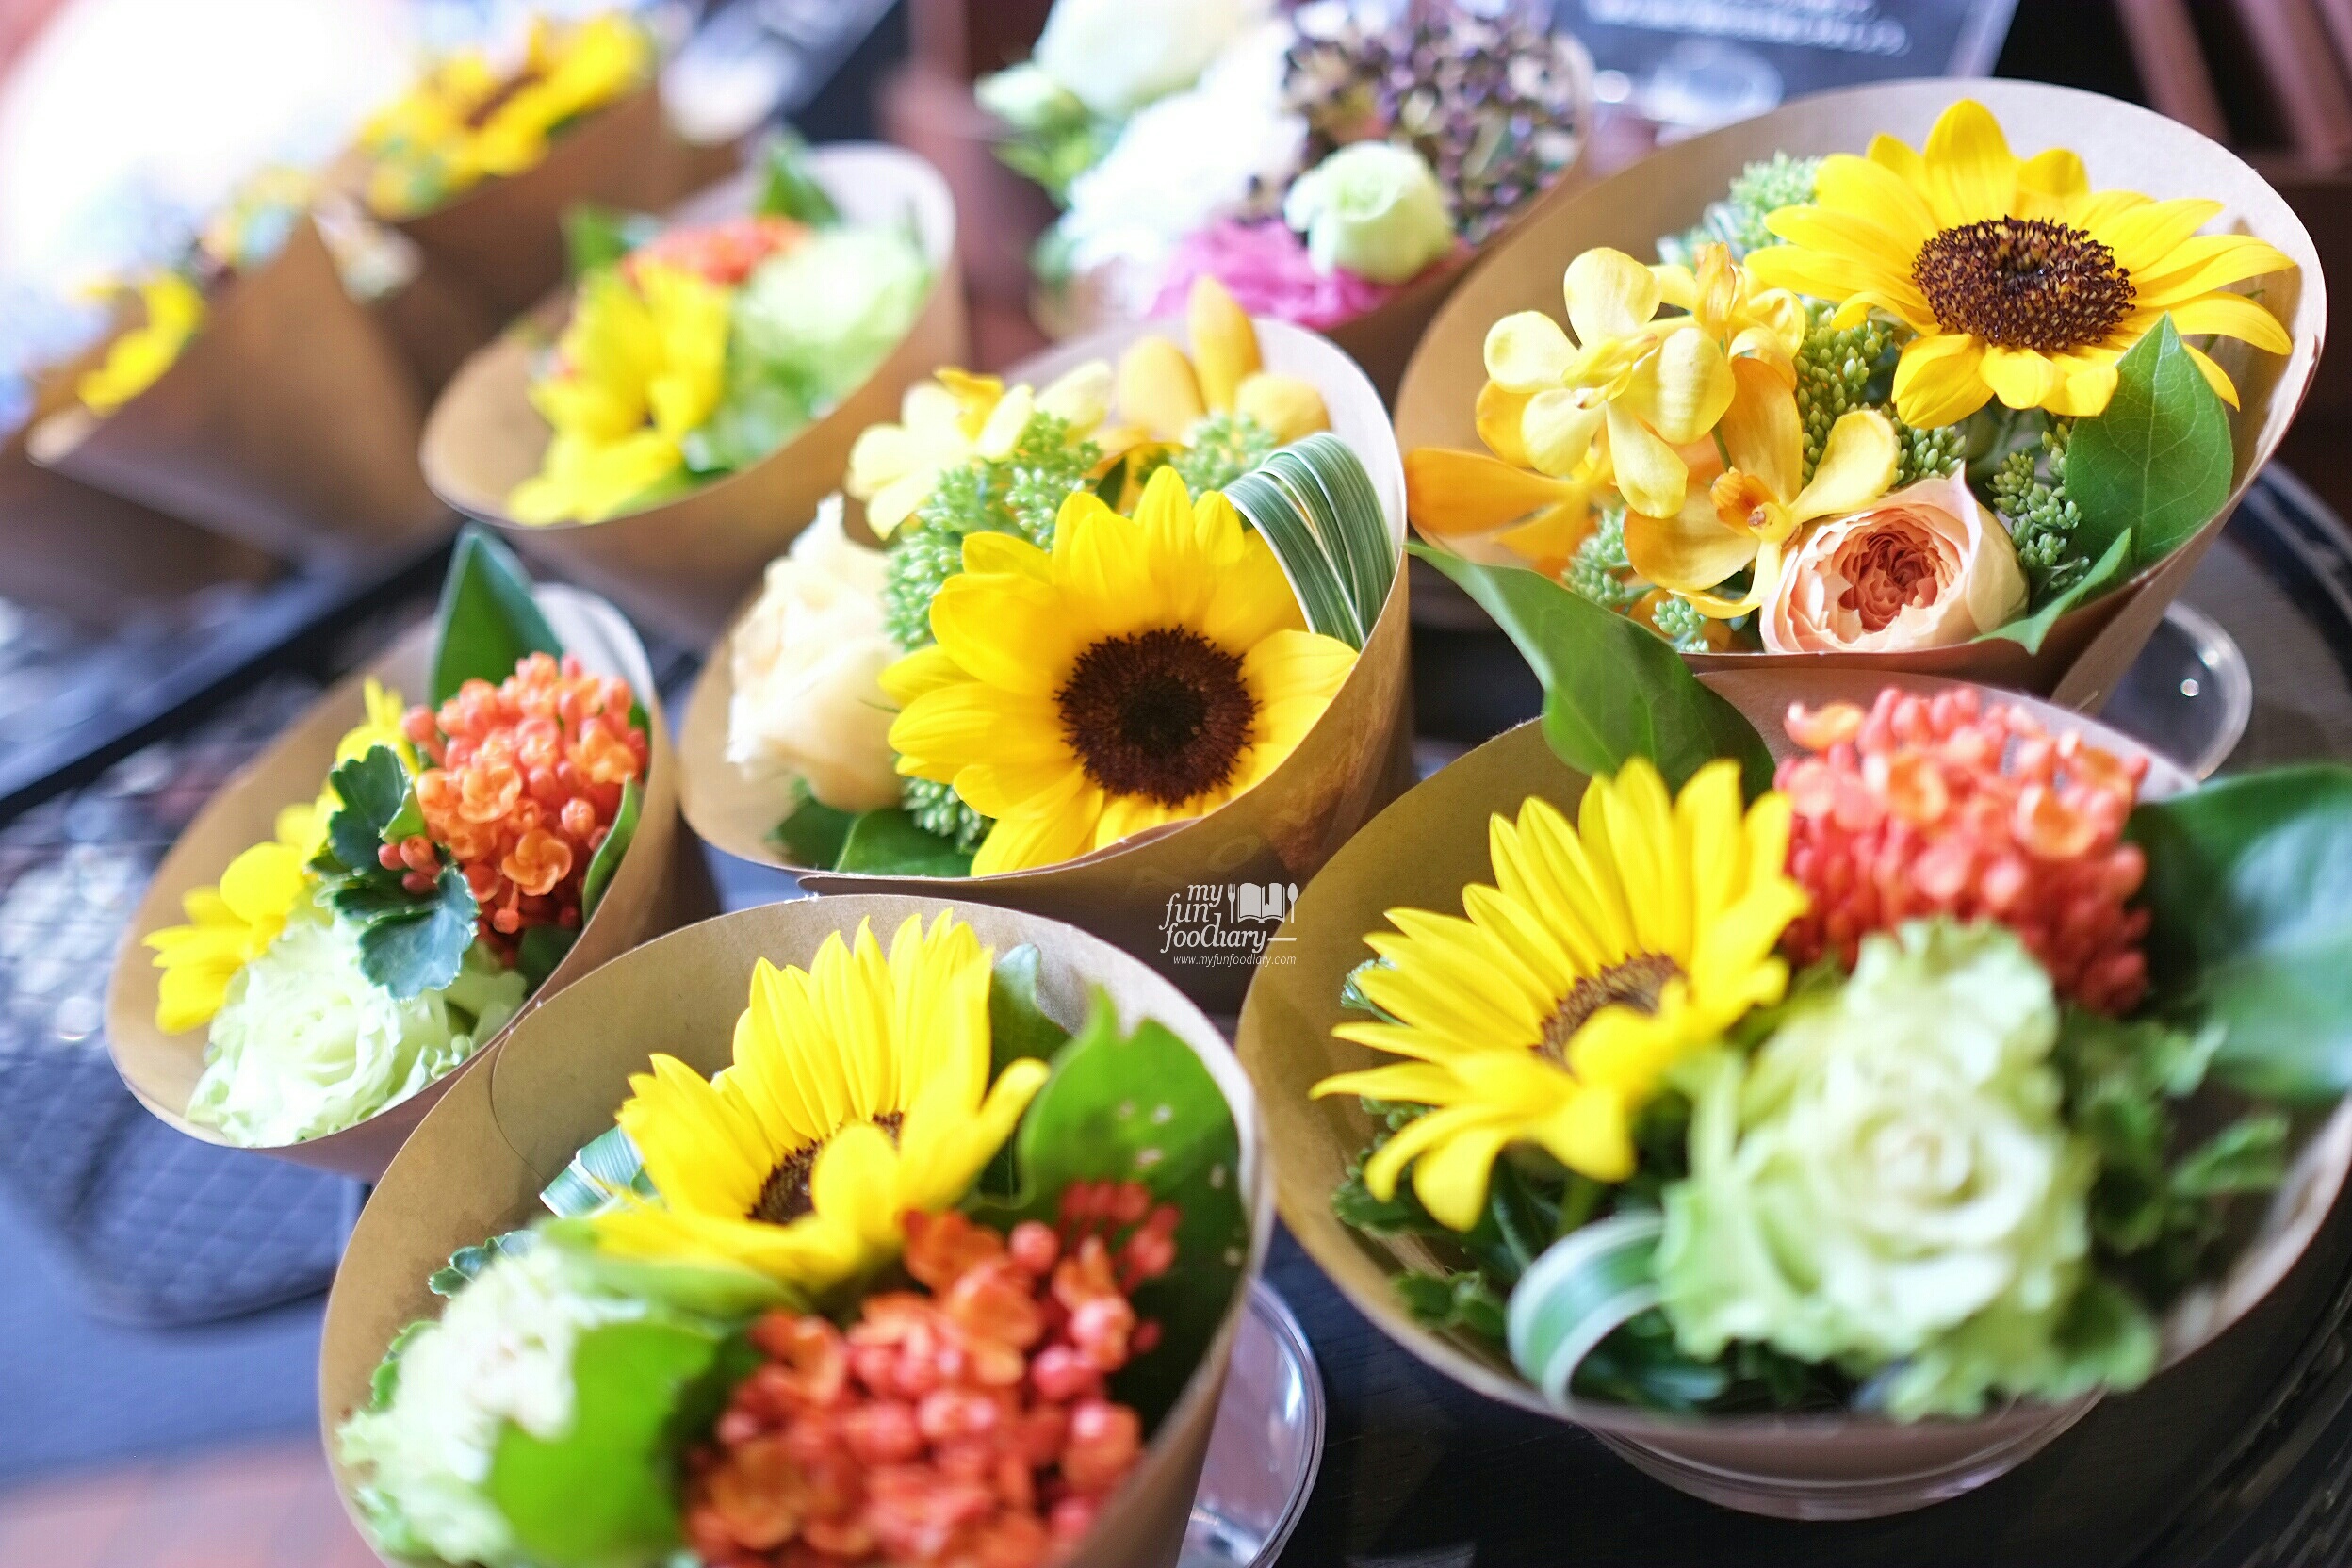 Beautiful Flowers at Aoyama Flower Market in Tokyo Japan by Myfunfoodiary 02